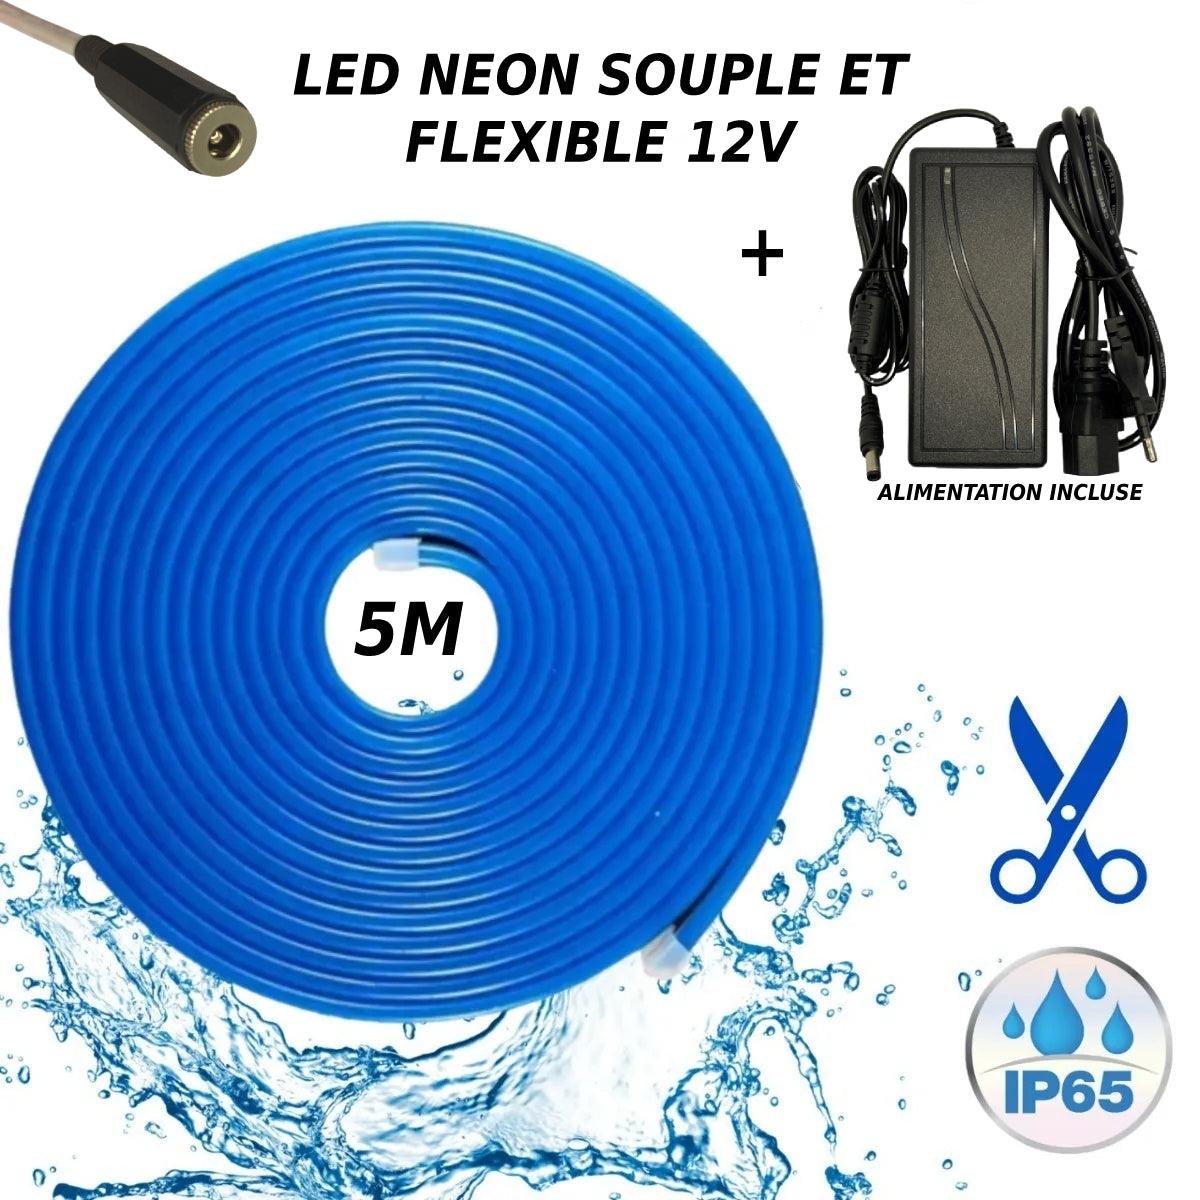 Flexibler Neon-LED-Streifen 12V Blau 5M